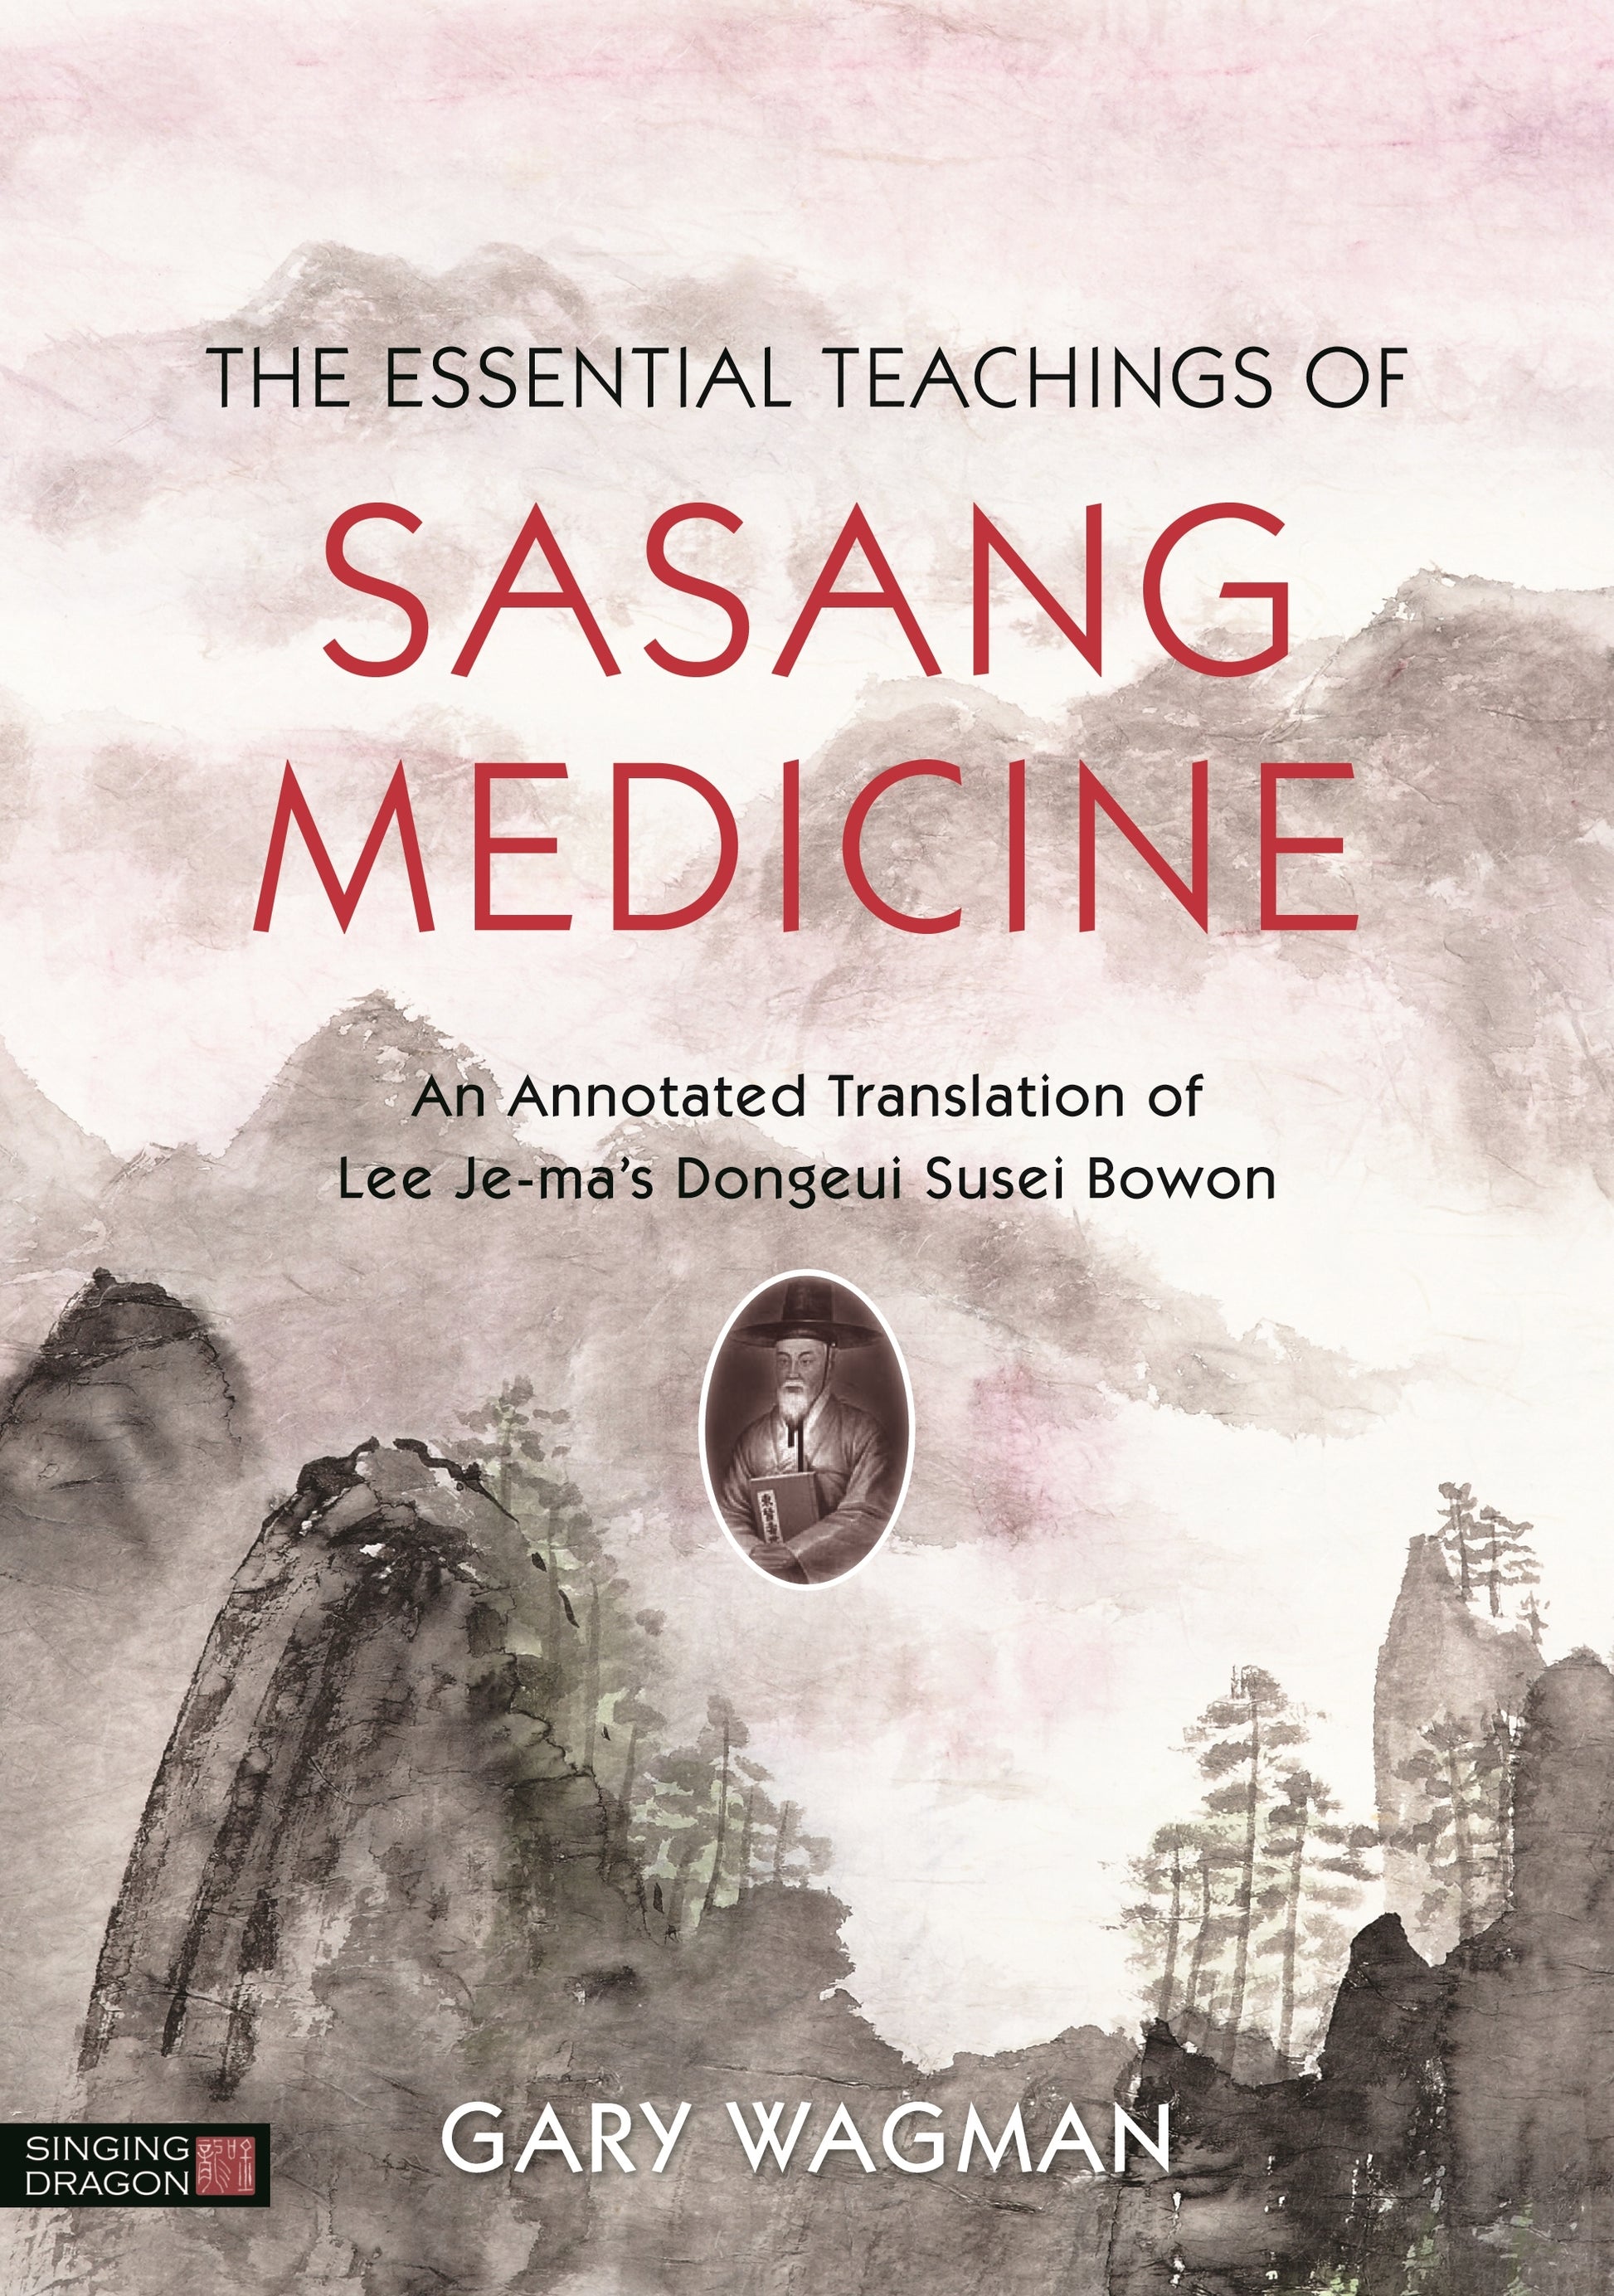 The Essential Teachings of Sasang Medicine by Gary Wagman